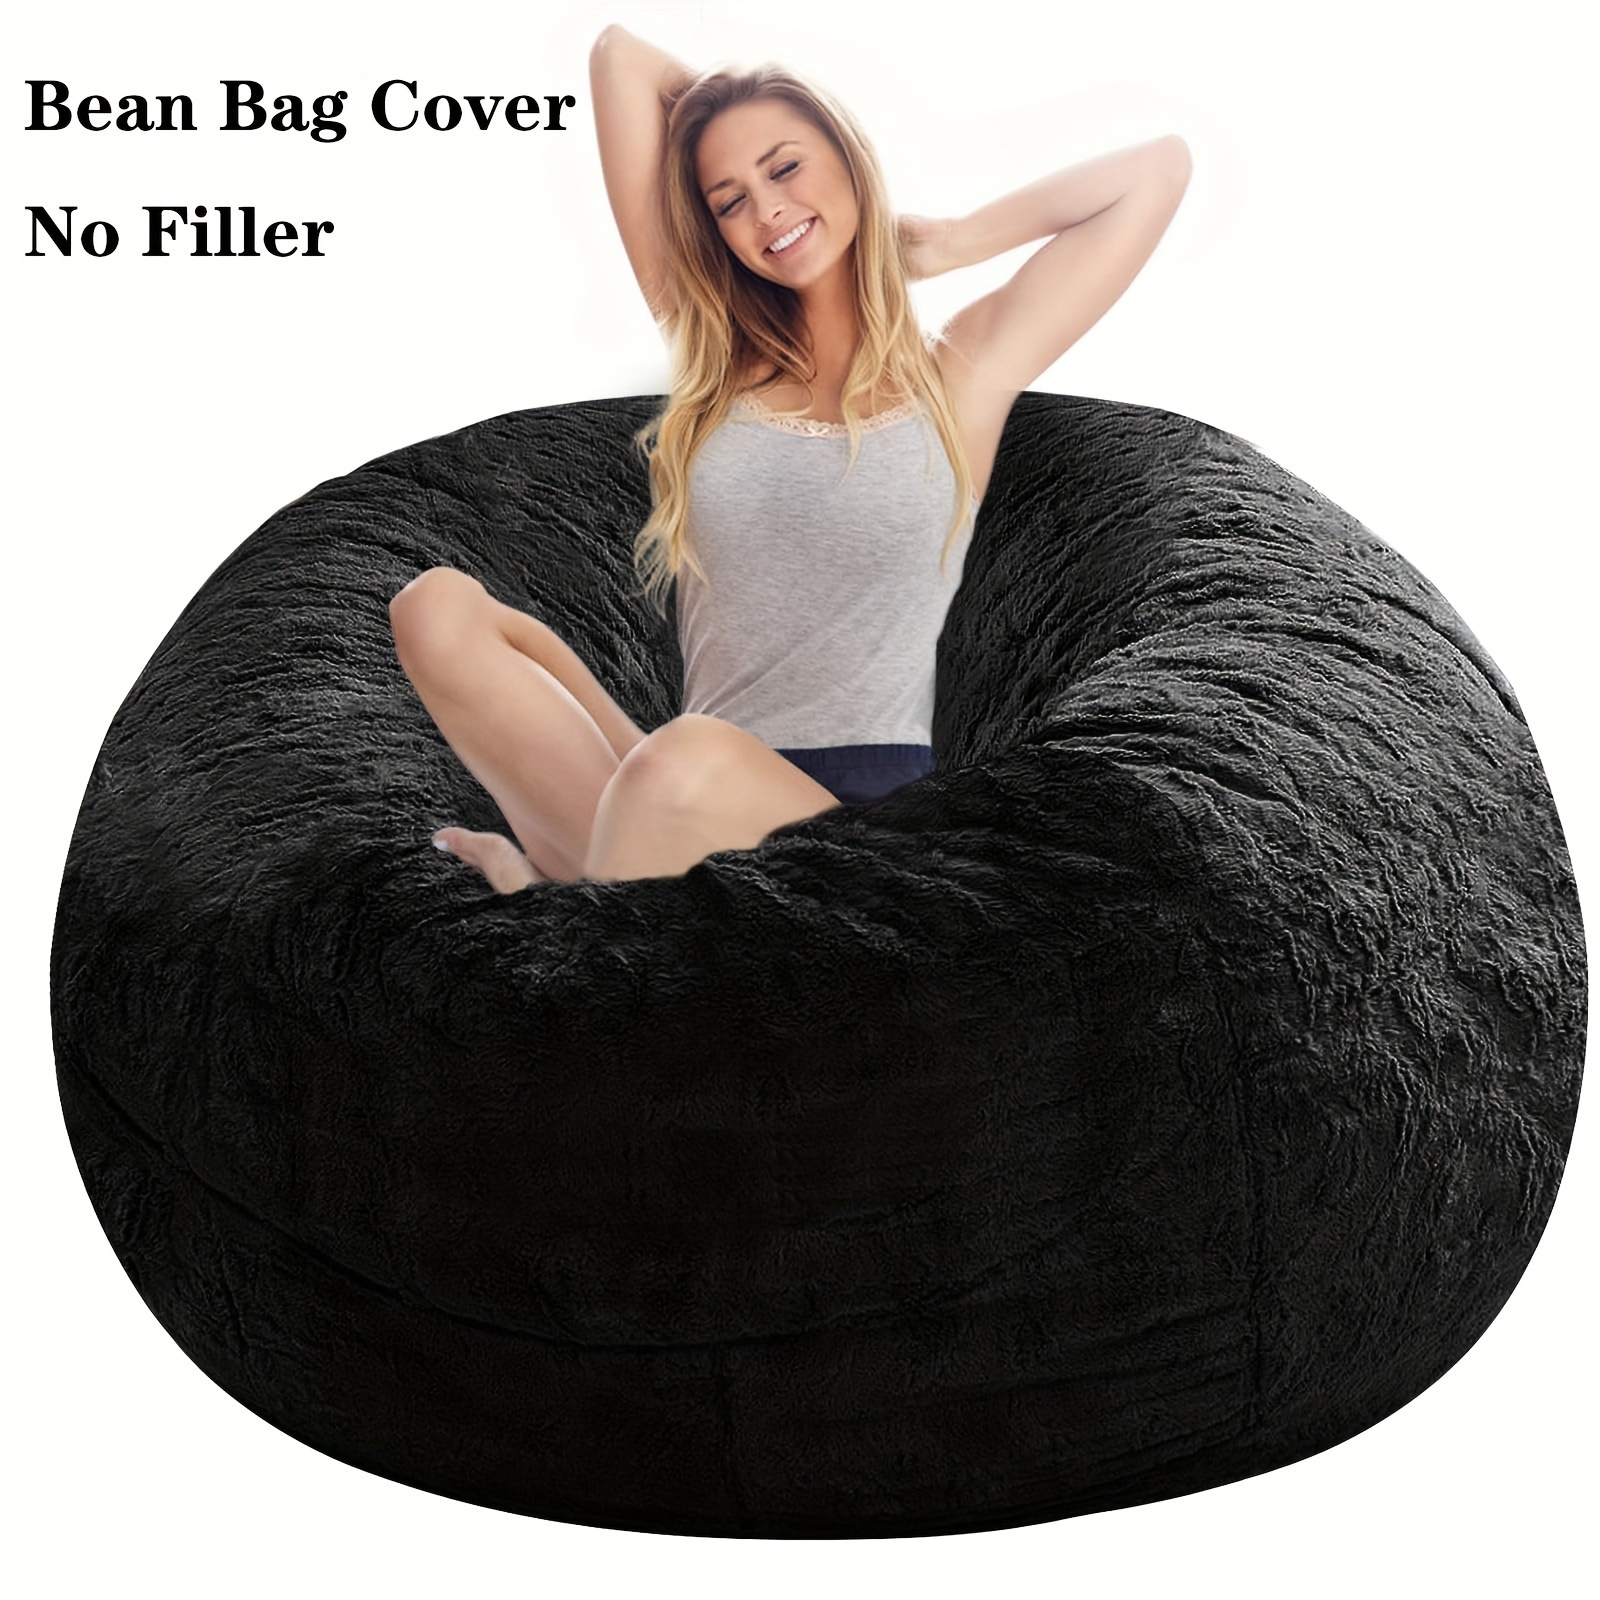 Bean Bag Chair Cover(No Filler)Big Round 6ft - Bed Bath & Beyond - 39688590